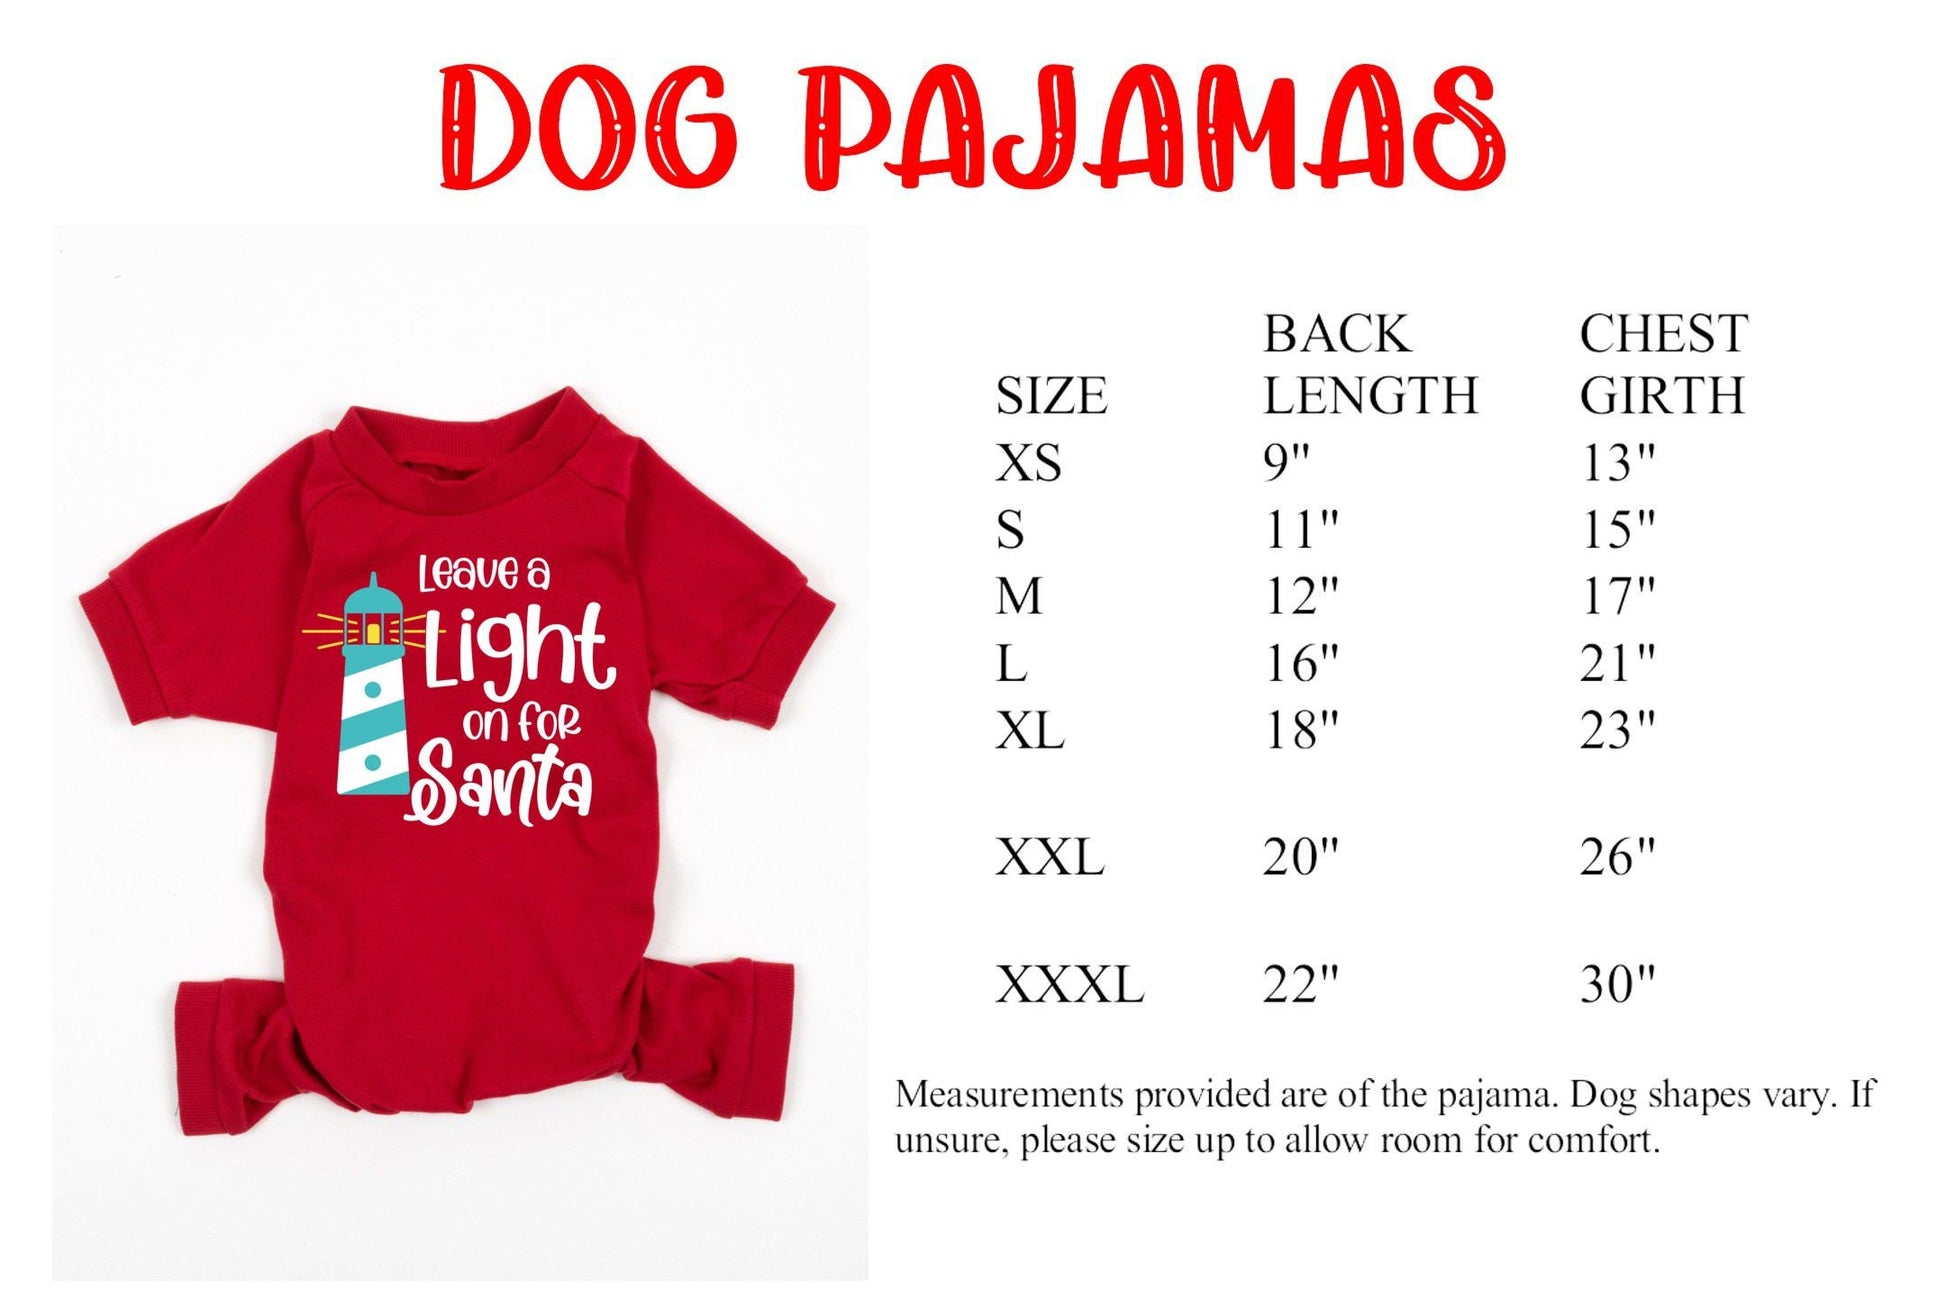 Leave a Light on For Santa Red Top Striped Christmas Pajamas - beach christmas - nautical christmas - coastal christmas